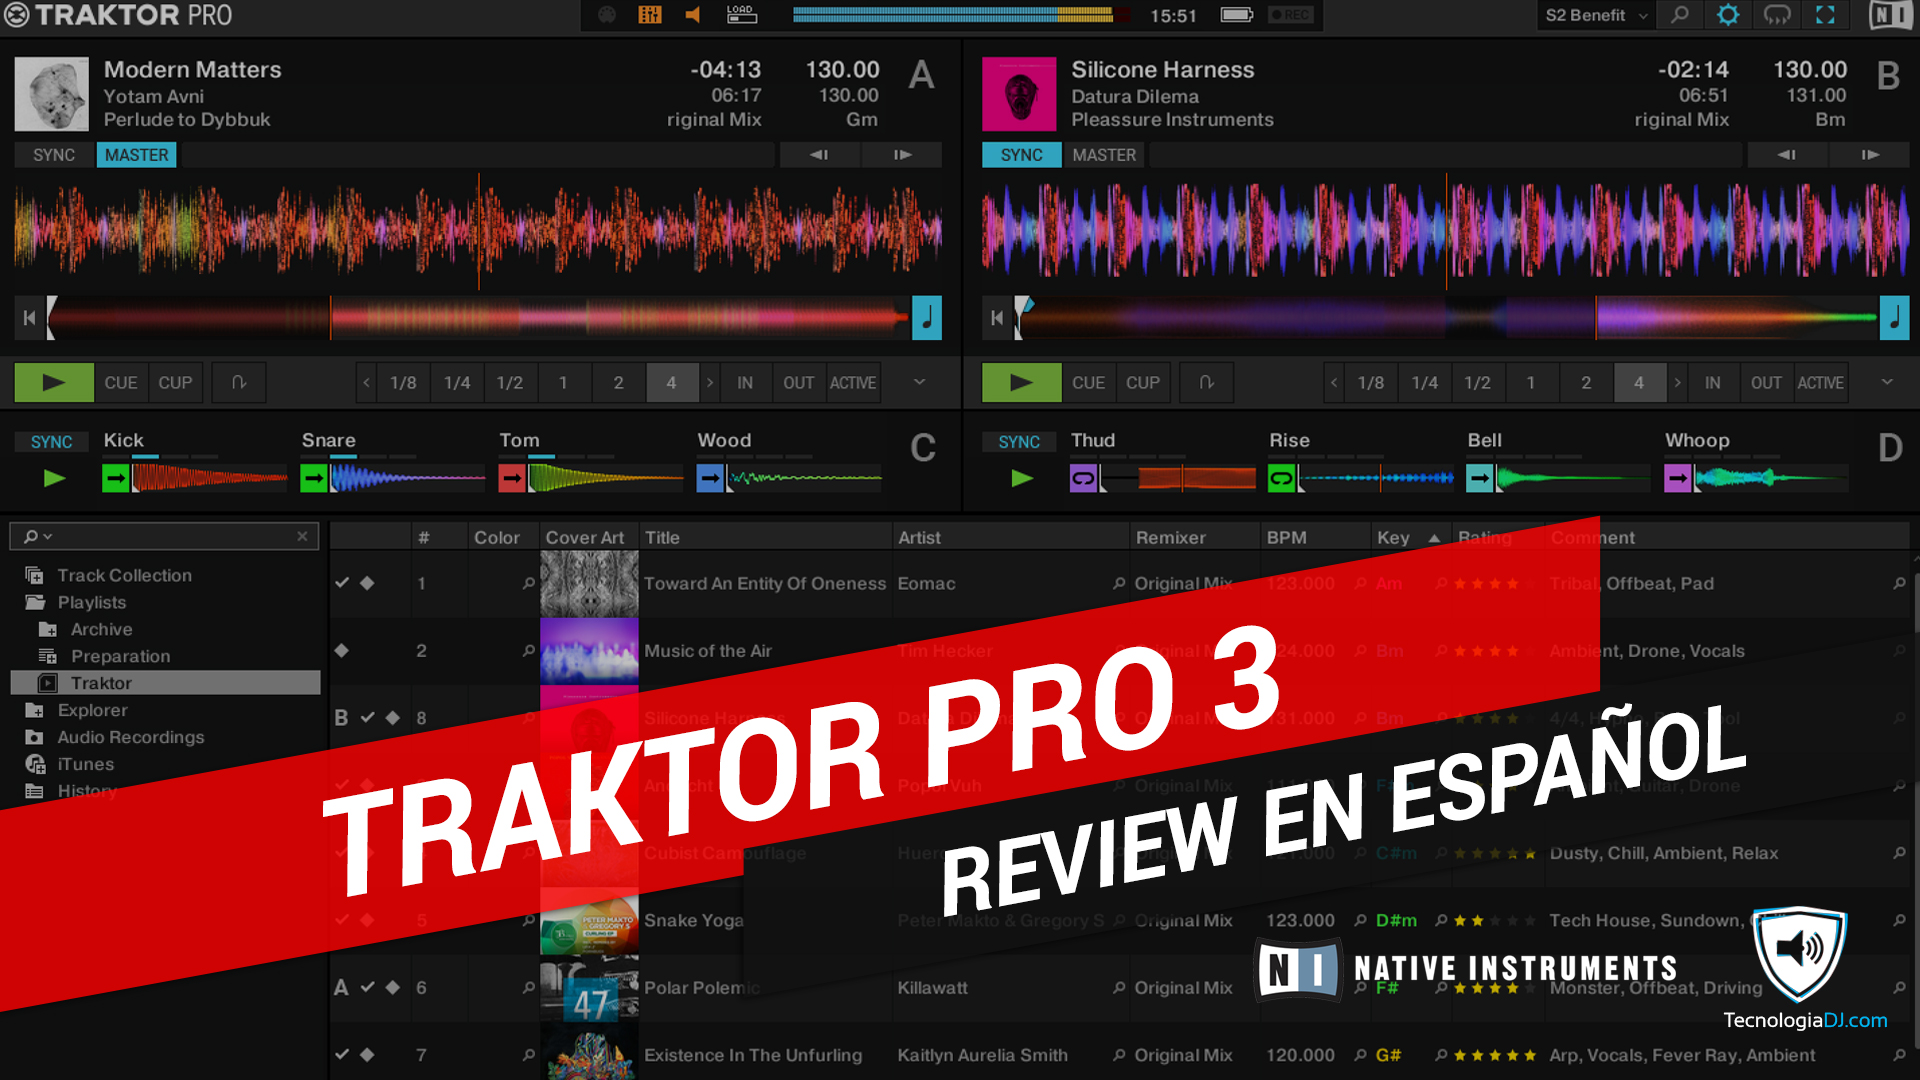 Review en español Traktor Pro 3